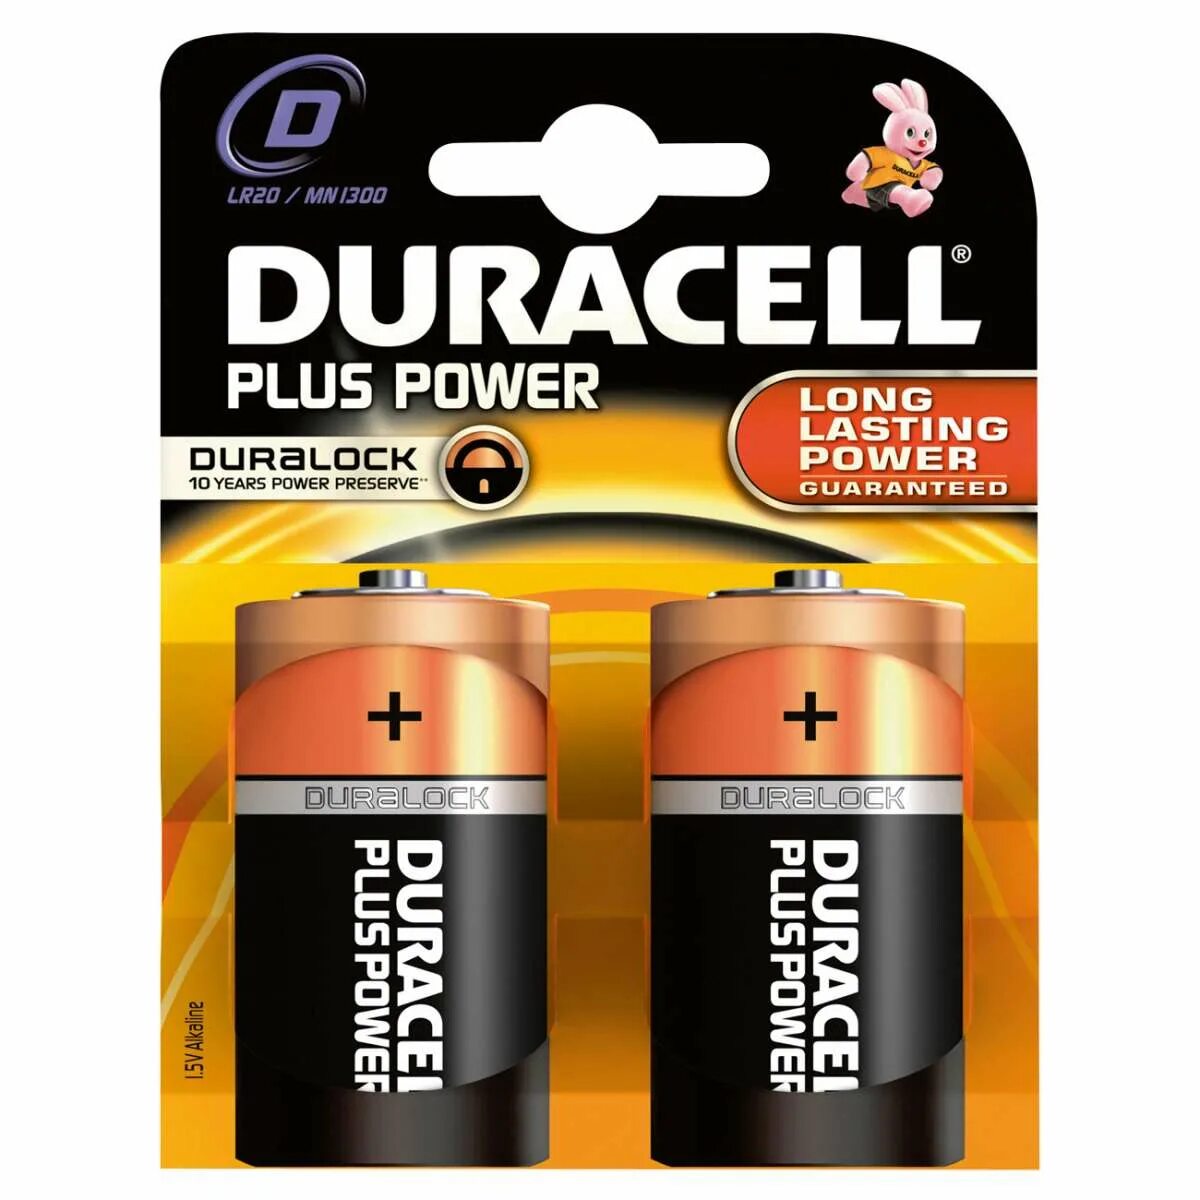 Duracell Plus Power. Duracell lr20. Батарейка d Duracell Basic lr20 mn1300 Alkaline 1.5v 287181. Батарейка Duracell lr20/mn1300 (d).